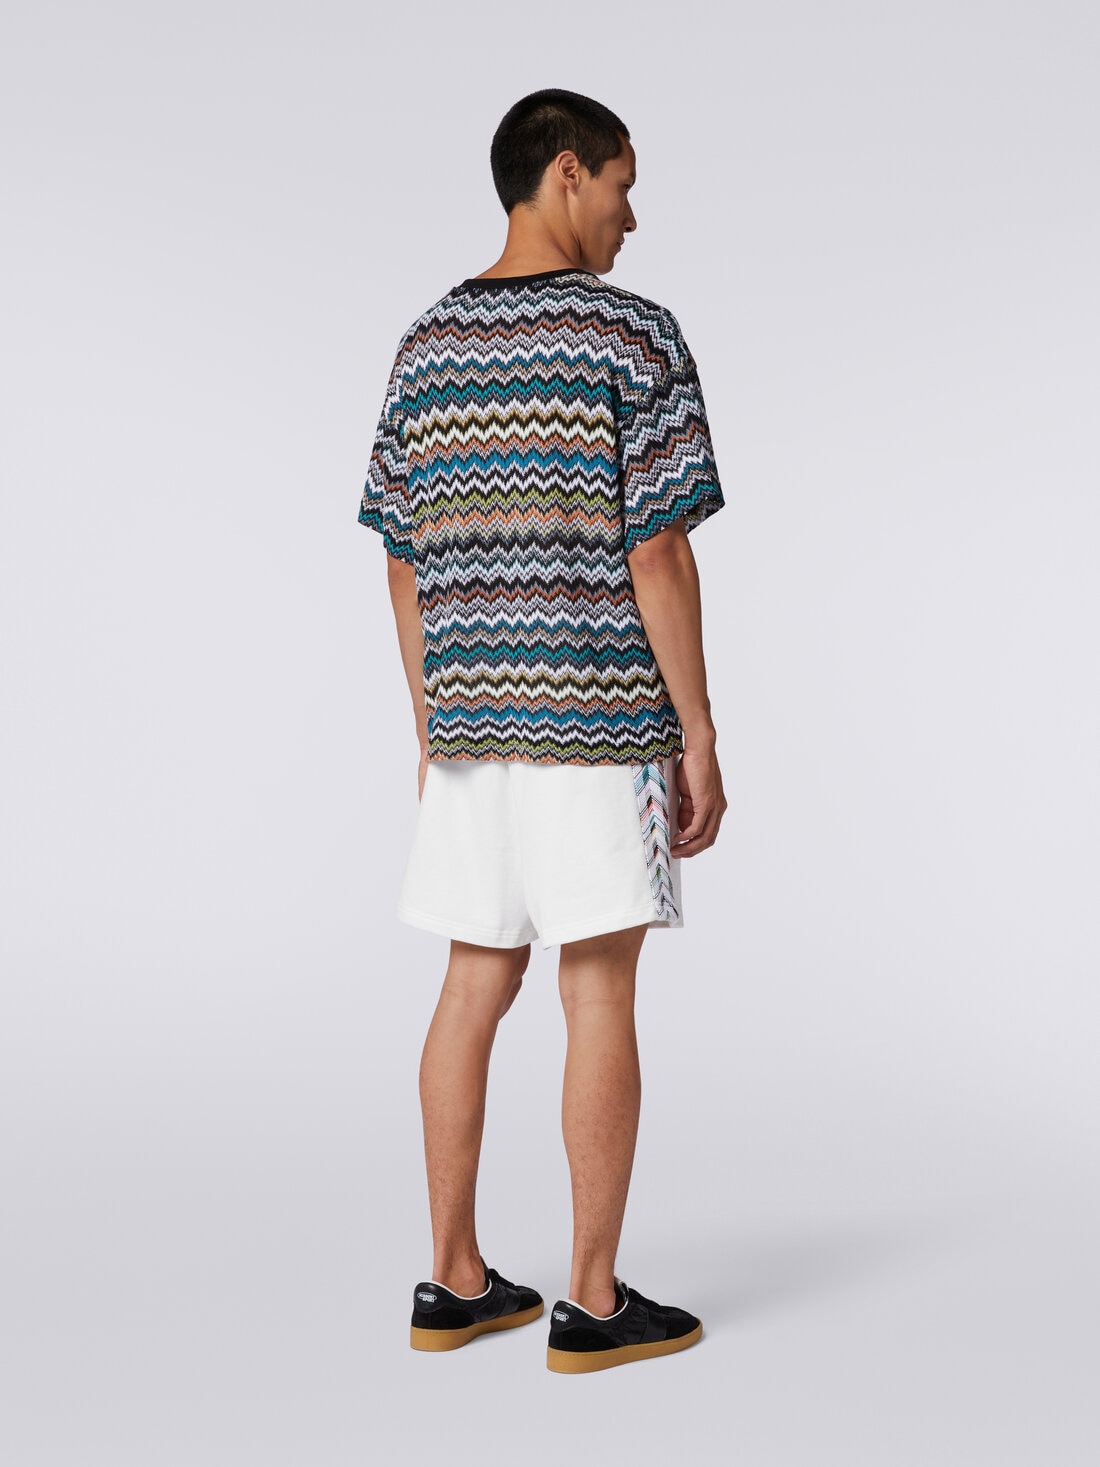 Crew-neck T-shirt in zigzag cotton knit, Multicoloured  - TS24SL03BR00UUSM9AX - 3